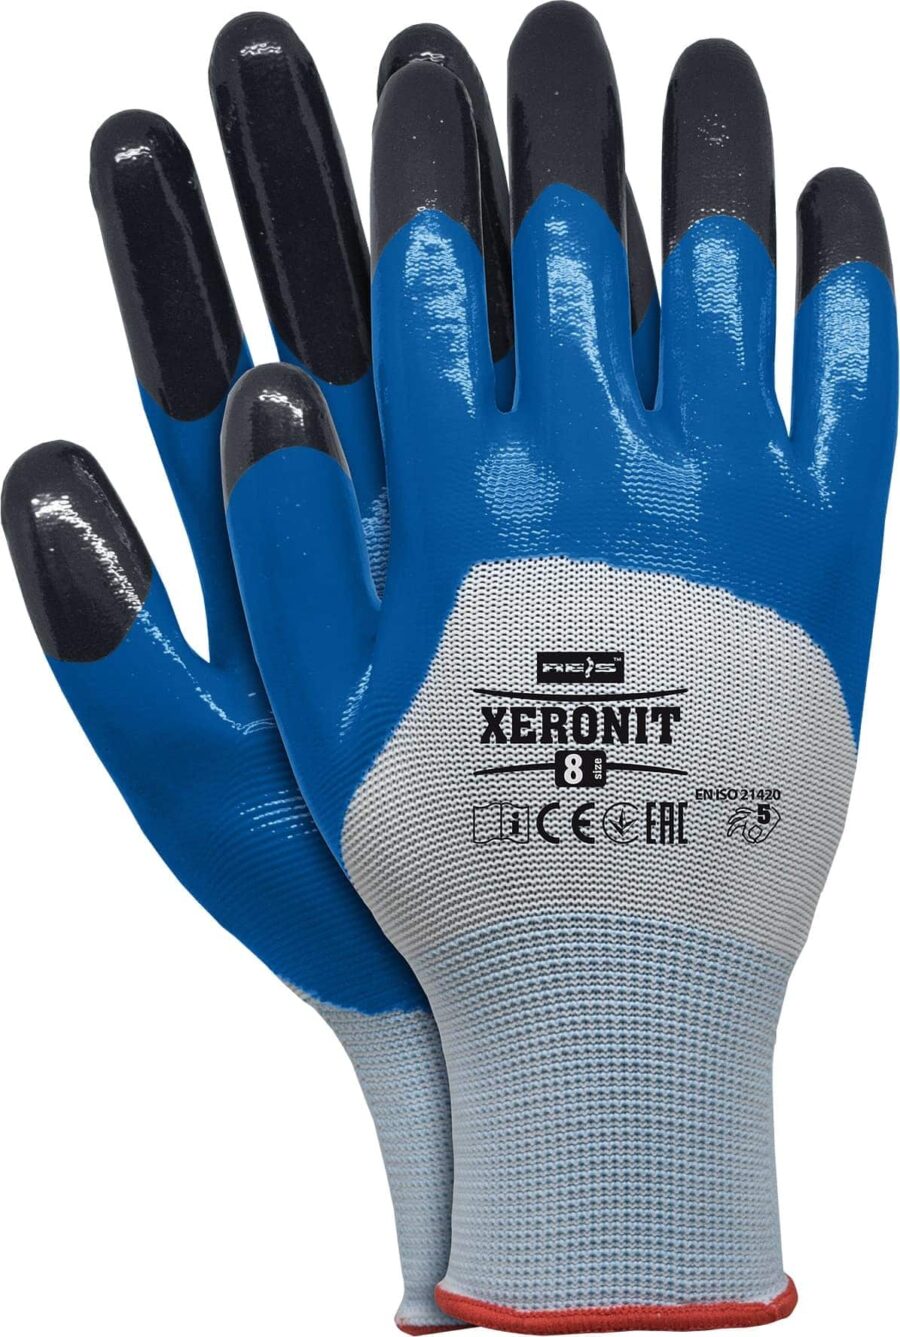 Pracovné rukavice nitrilové XERONIT BLUE